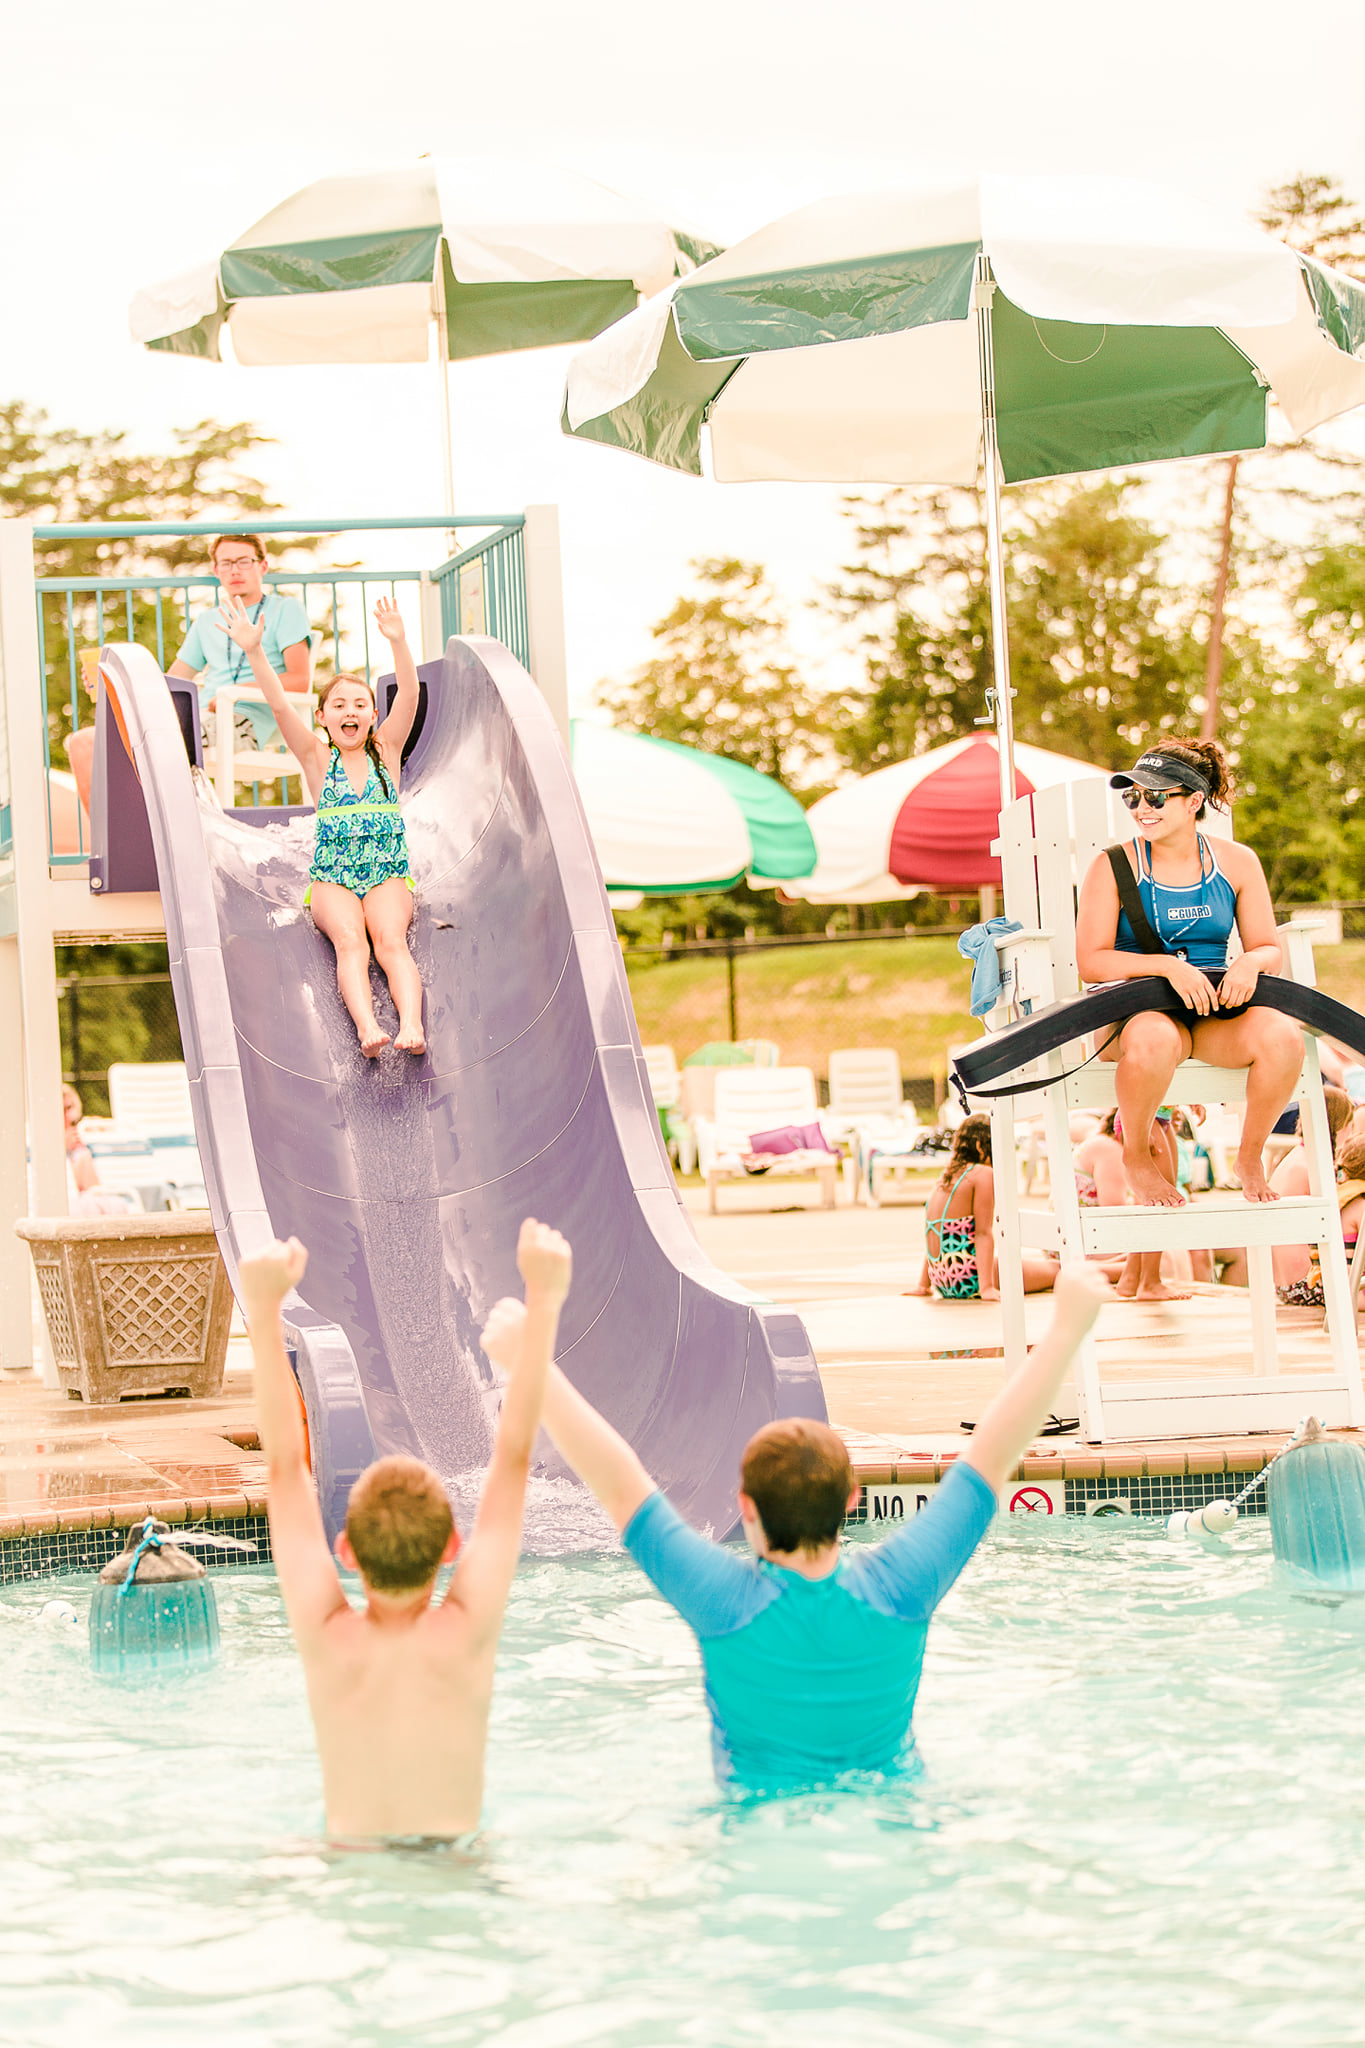 Splash into the fun this weekend at Splash Valley! Roanoke VA